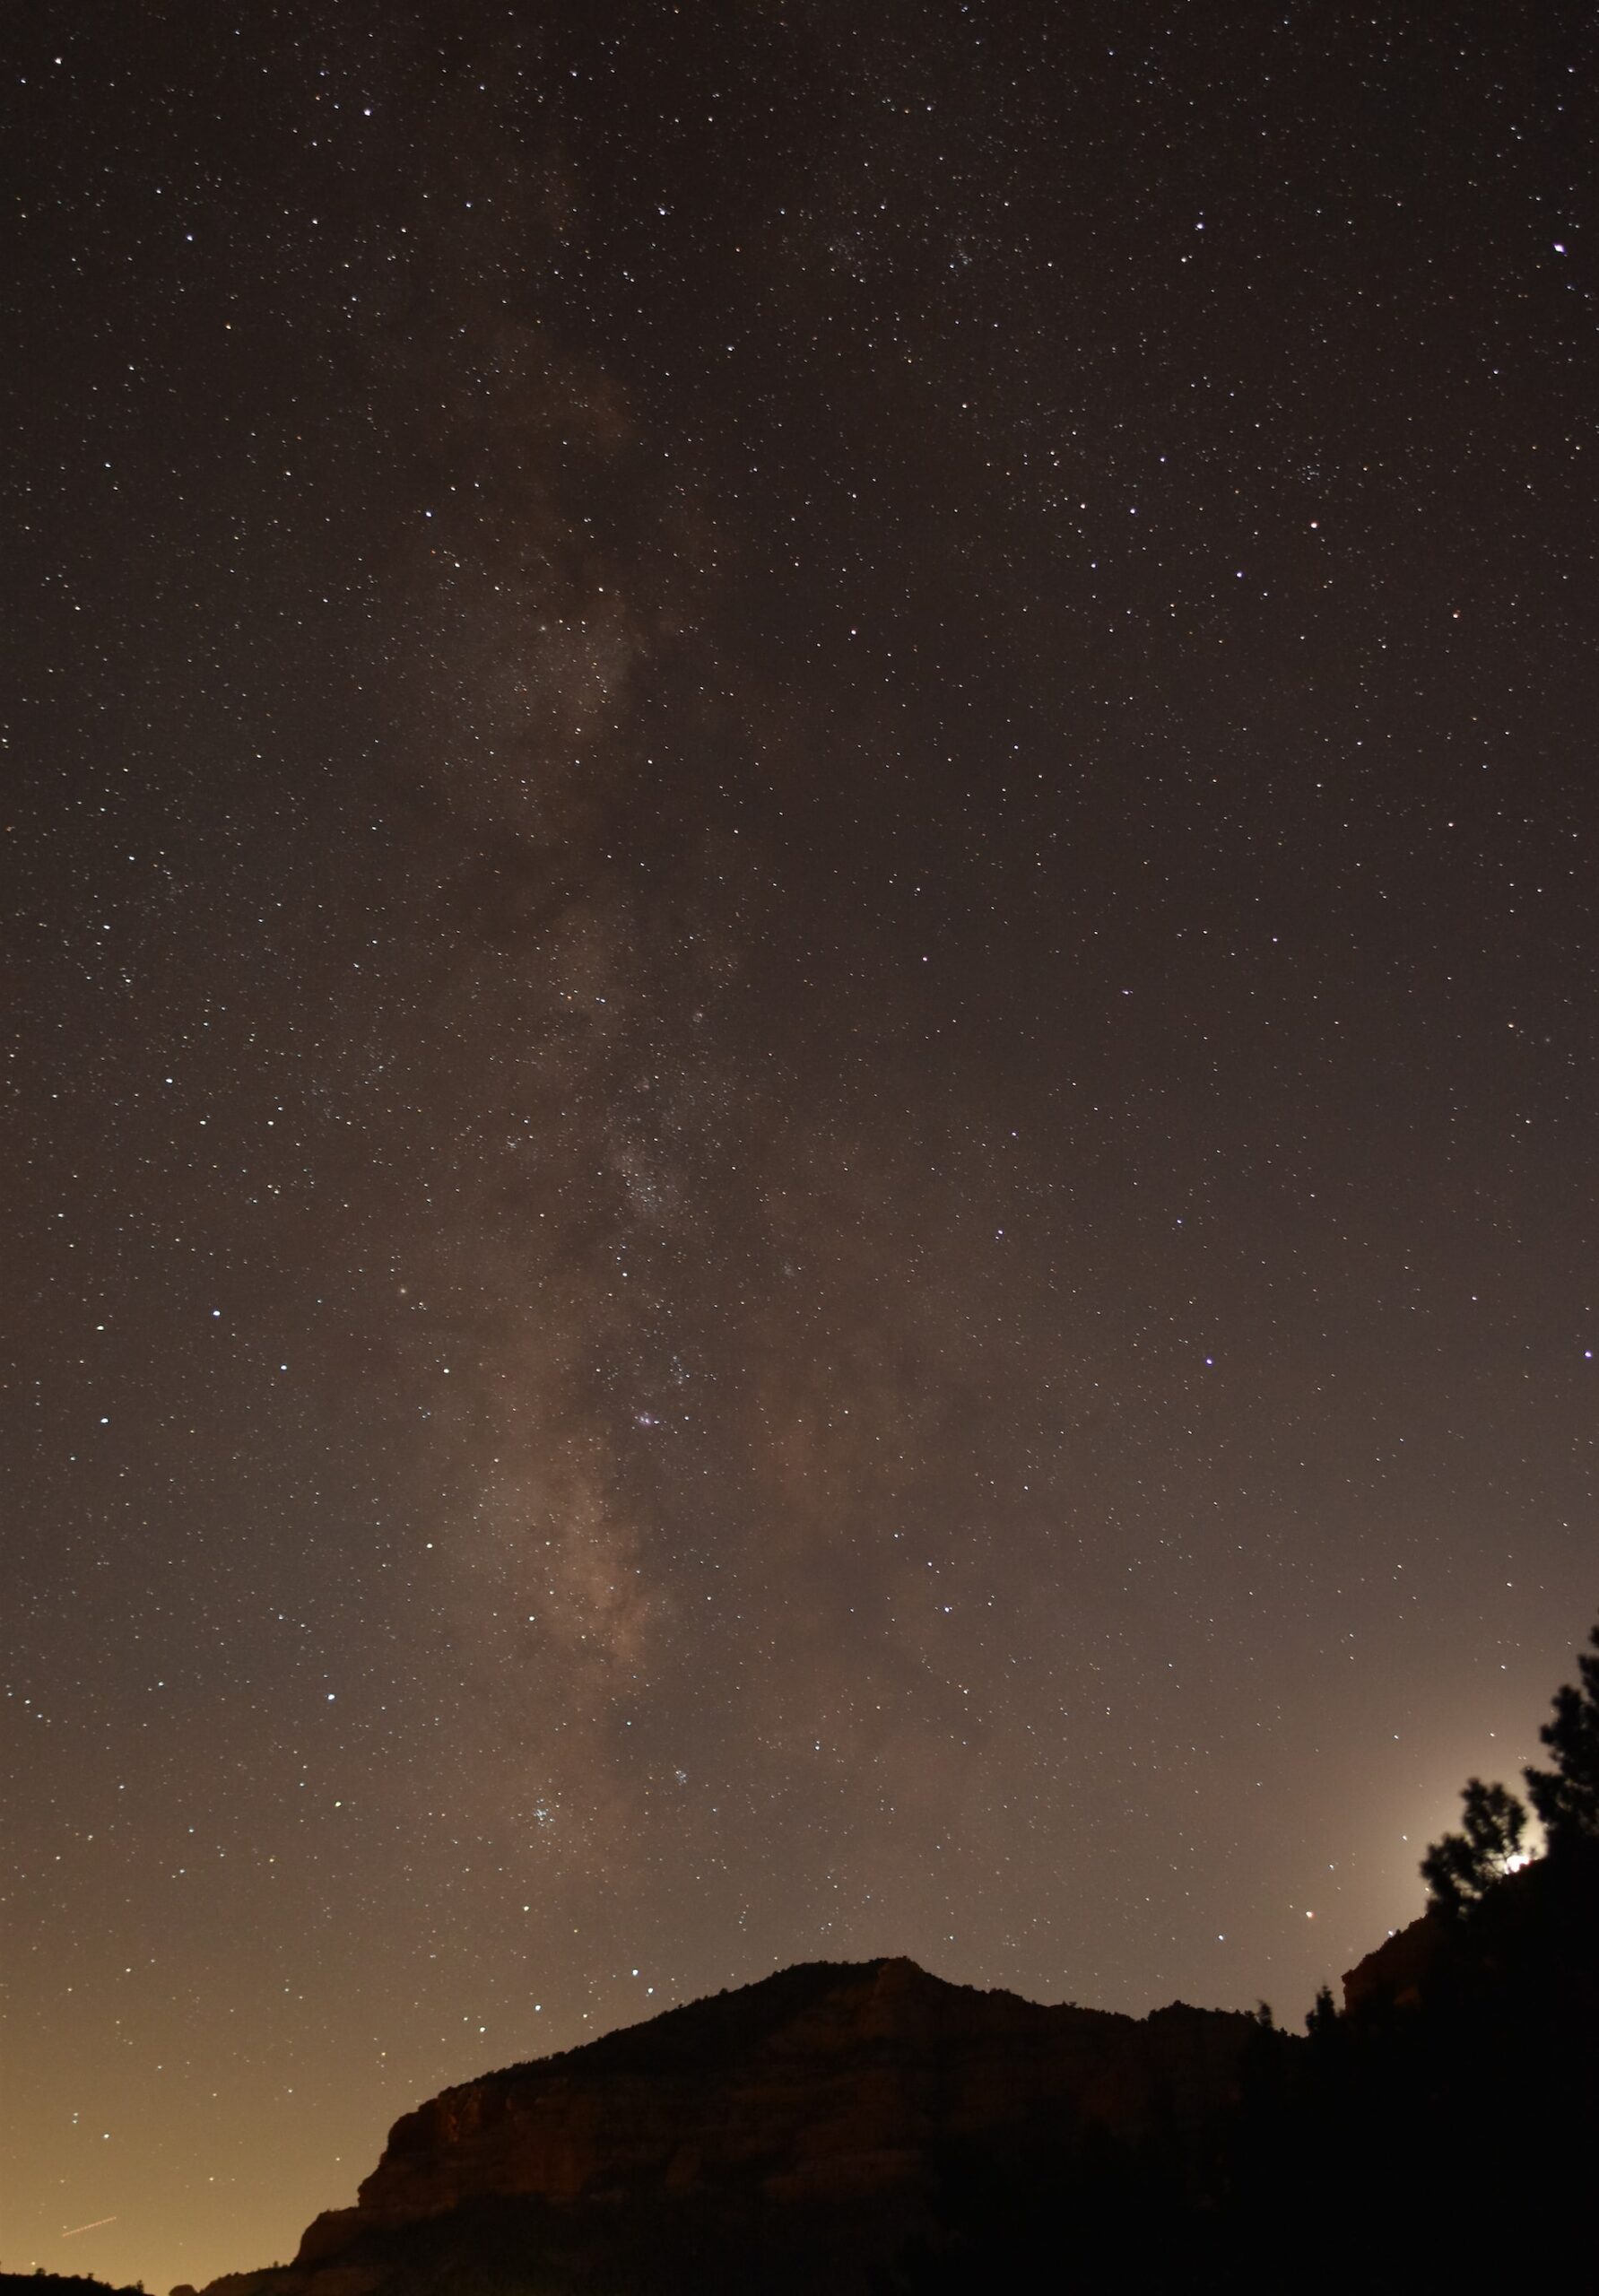 The Milky Way Galaxy as seen from Sedona (photo: Taylor Wright)